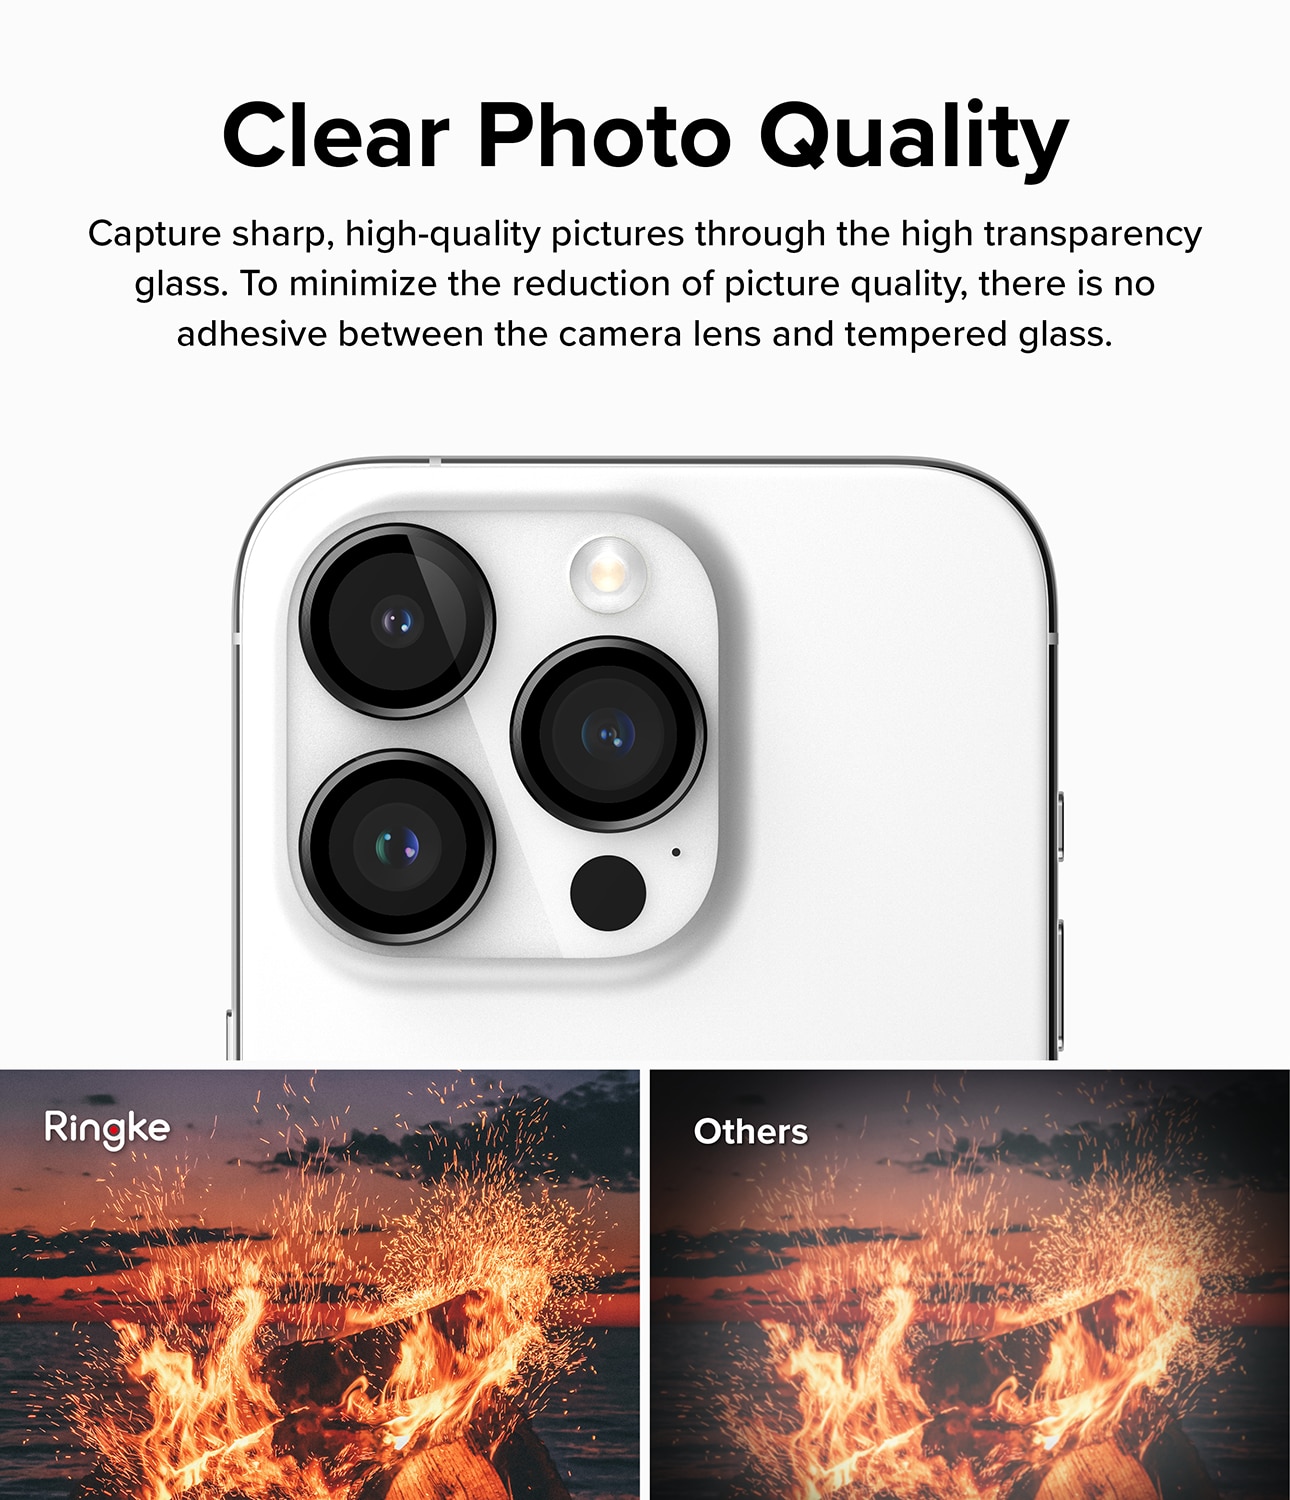 iPhone 15 Pro Camera Lens Frame Glass Black